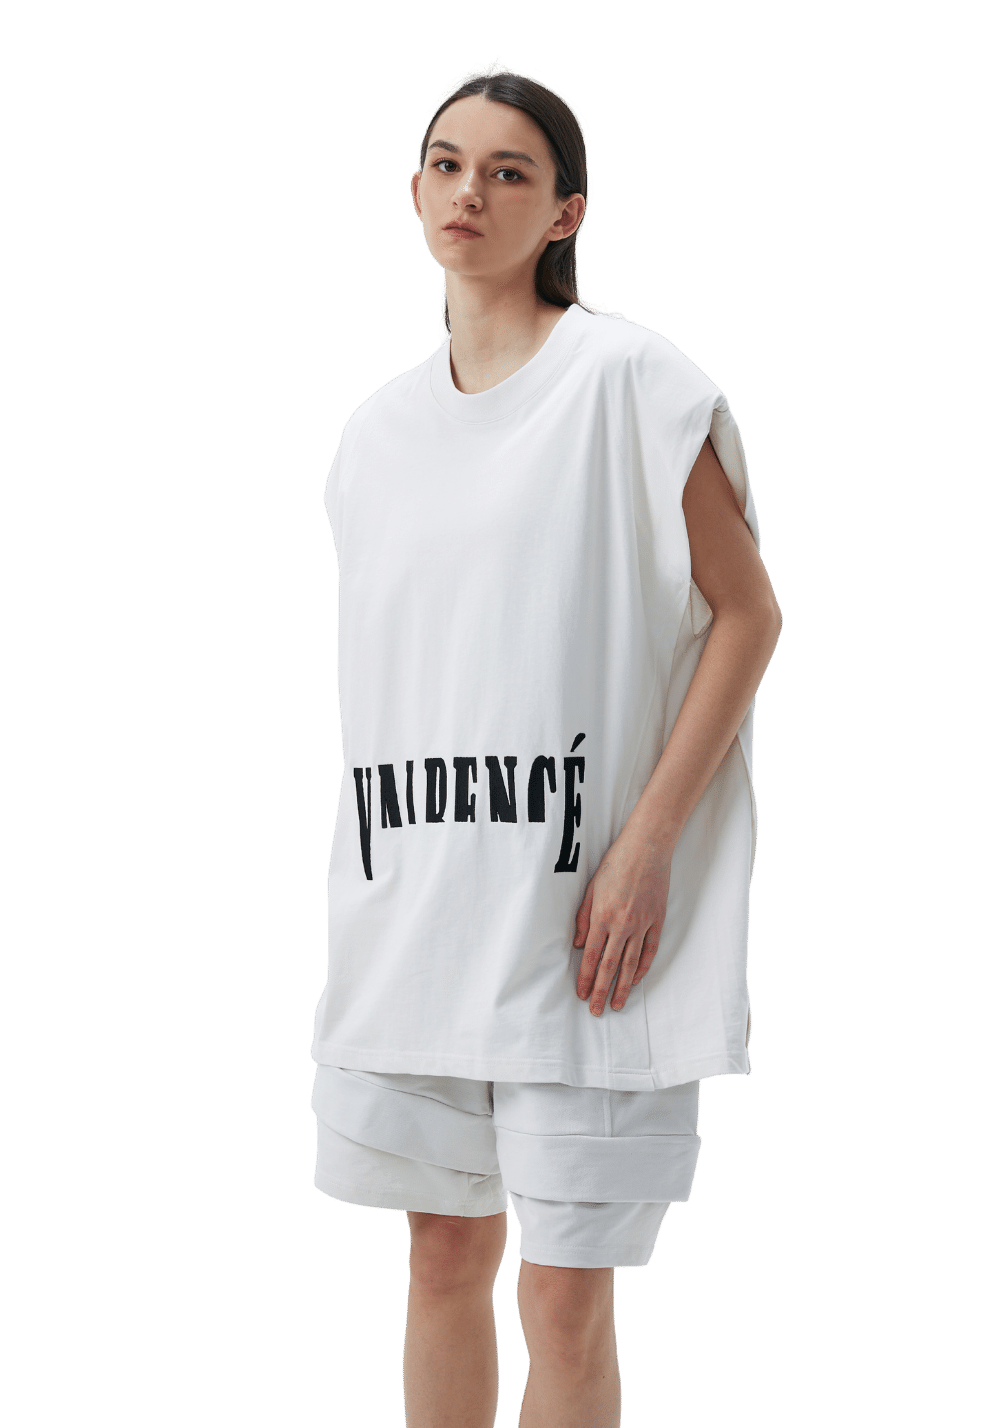 Shoulder Pad Embedded Sleeveless T-shirt - PSYLOS 1, Shoulder Pad Embedded Sleeveless T-shirt, T-Shirt, VANN VALRENCÉ, PSYLOS 1